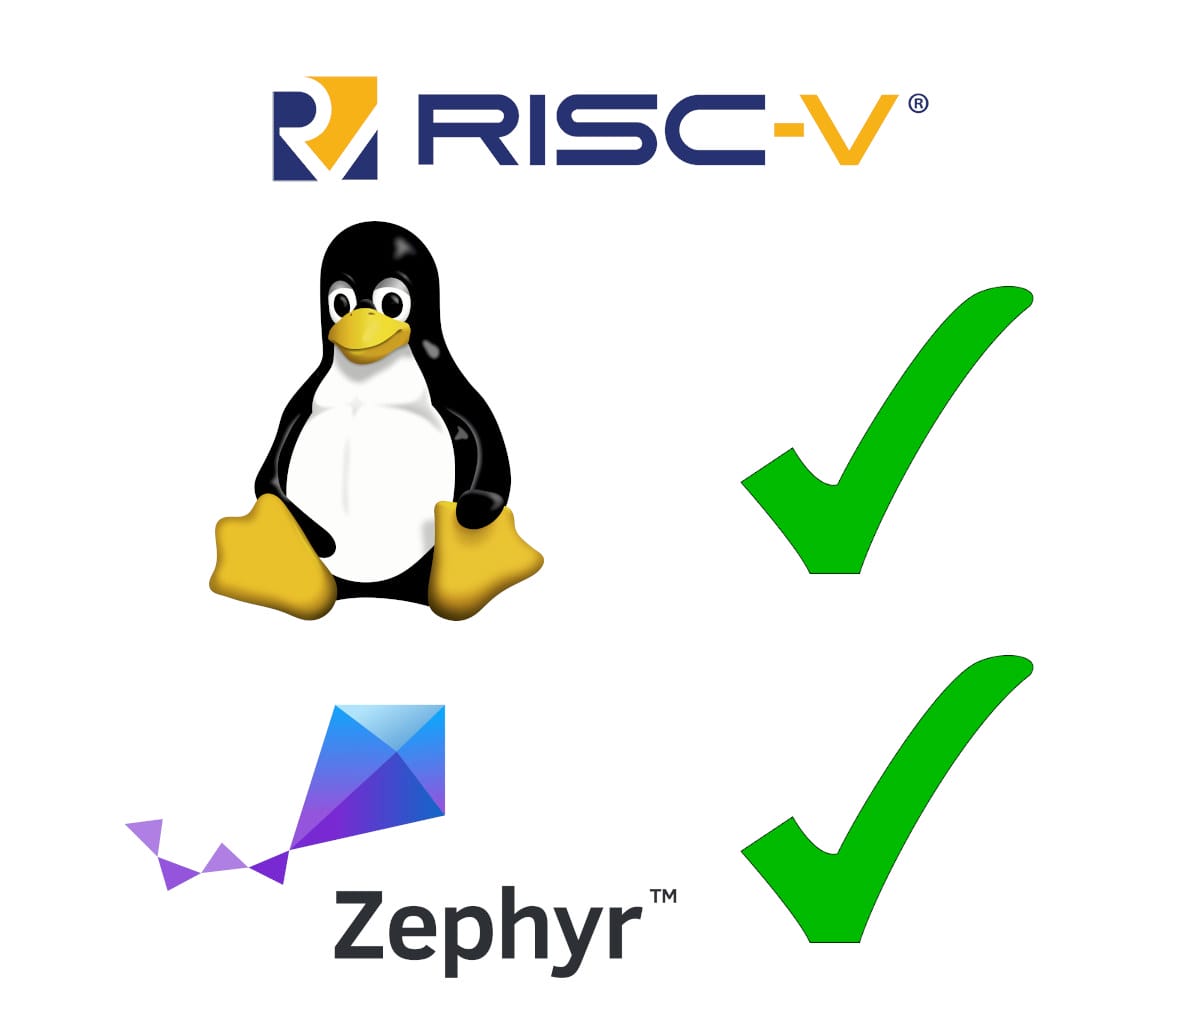 RISC-V platform specification